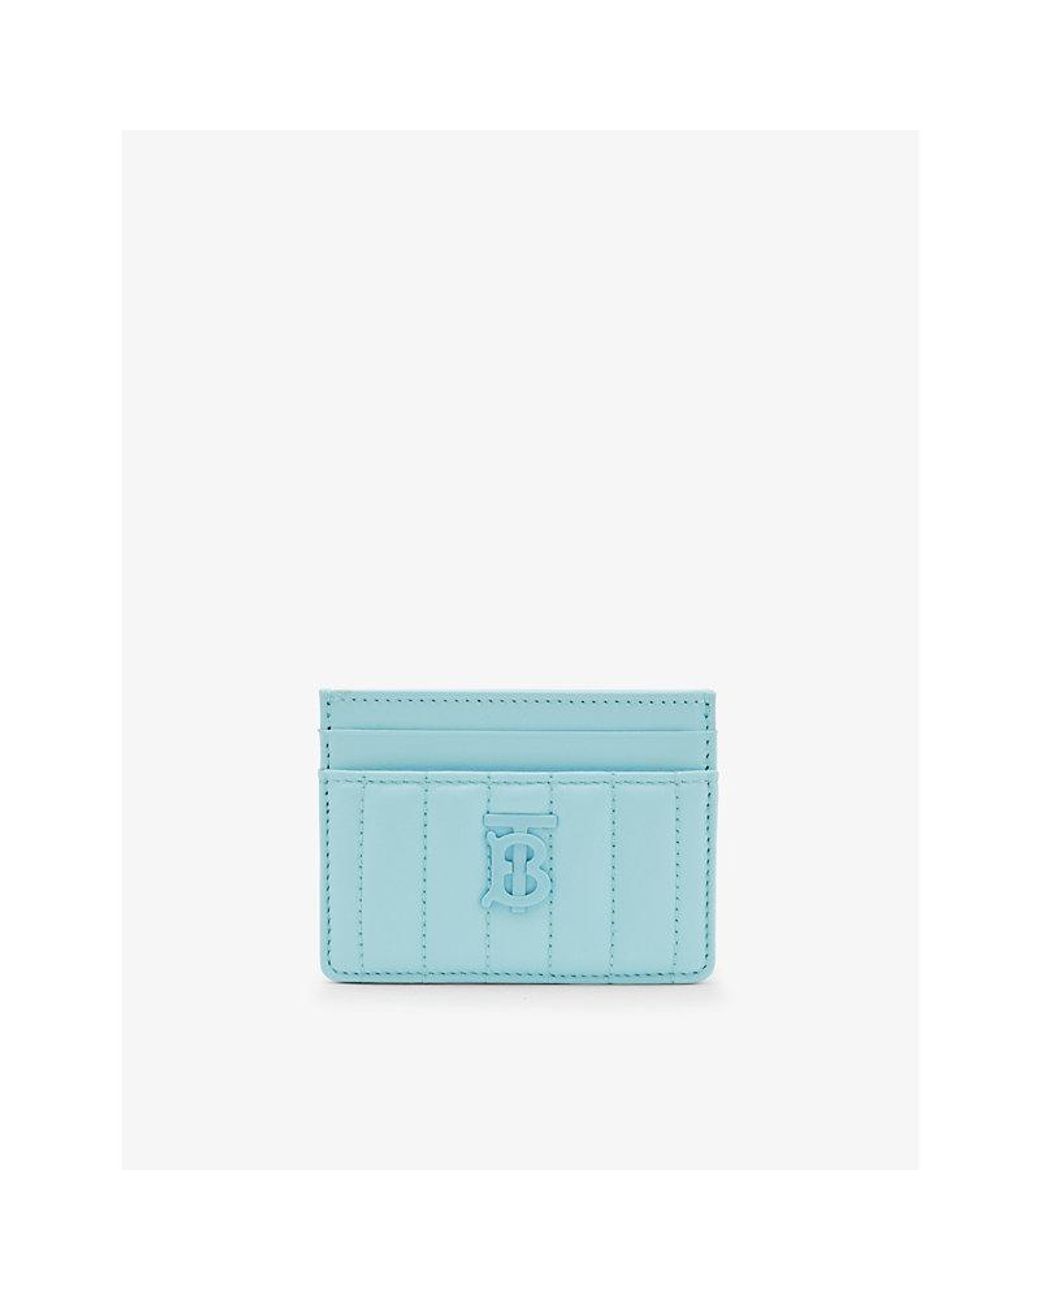 Burberry Lola Brand-moniker Leather Card Holder in Blue